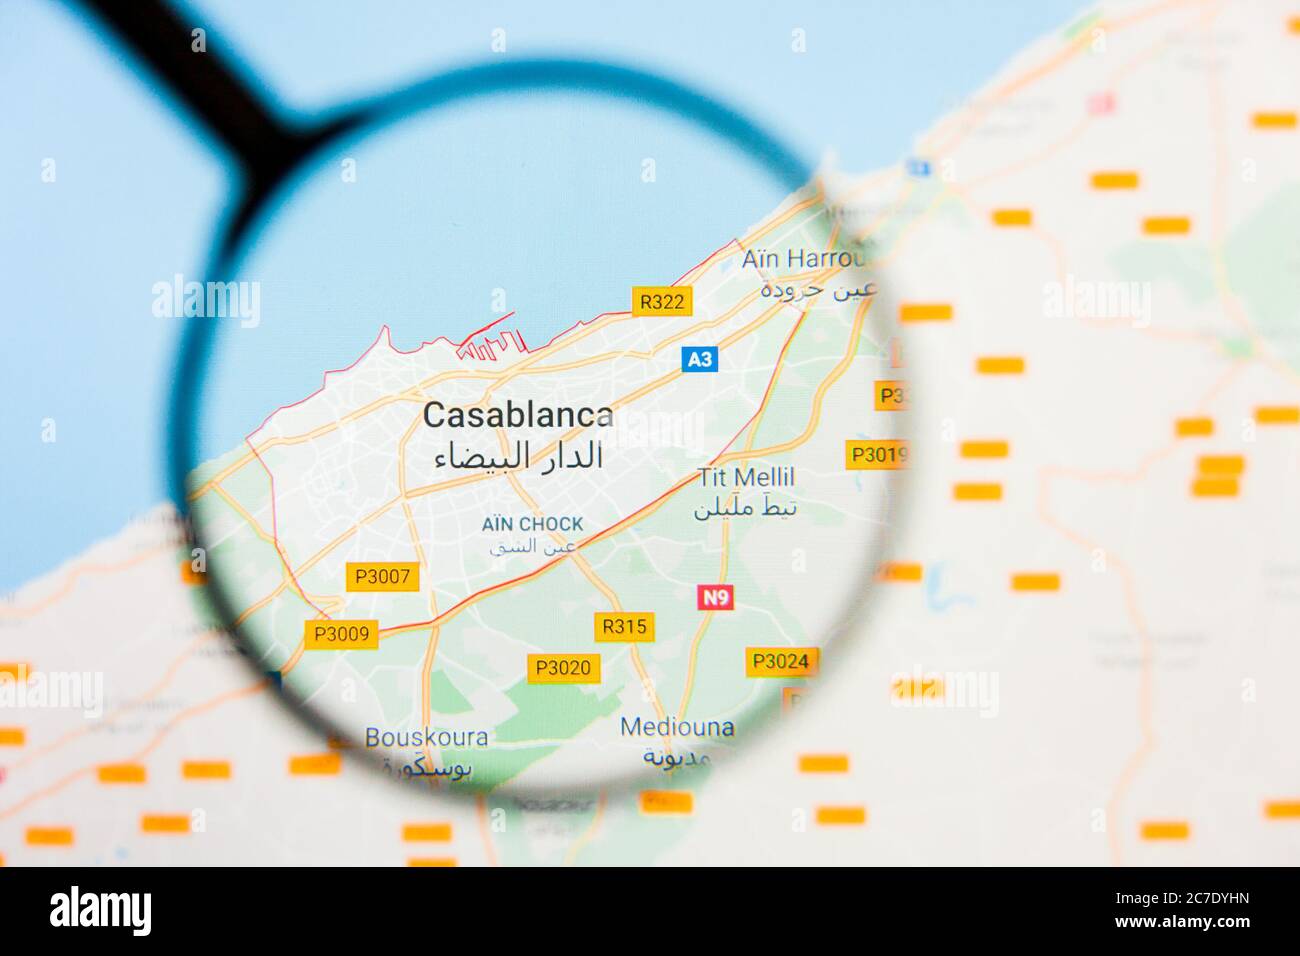 Casablanca, Morroco city visualization illustrative concept on display screen through magnifying glass Stock Photo